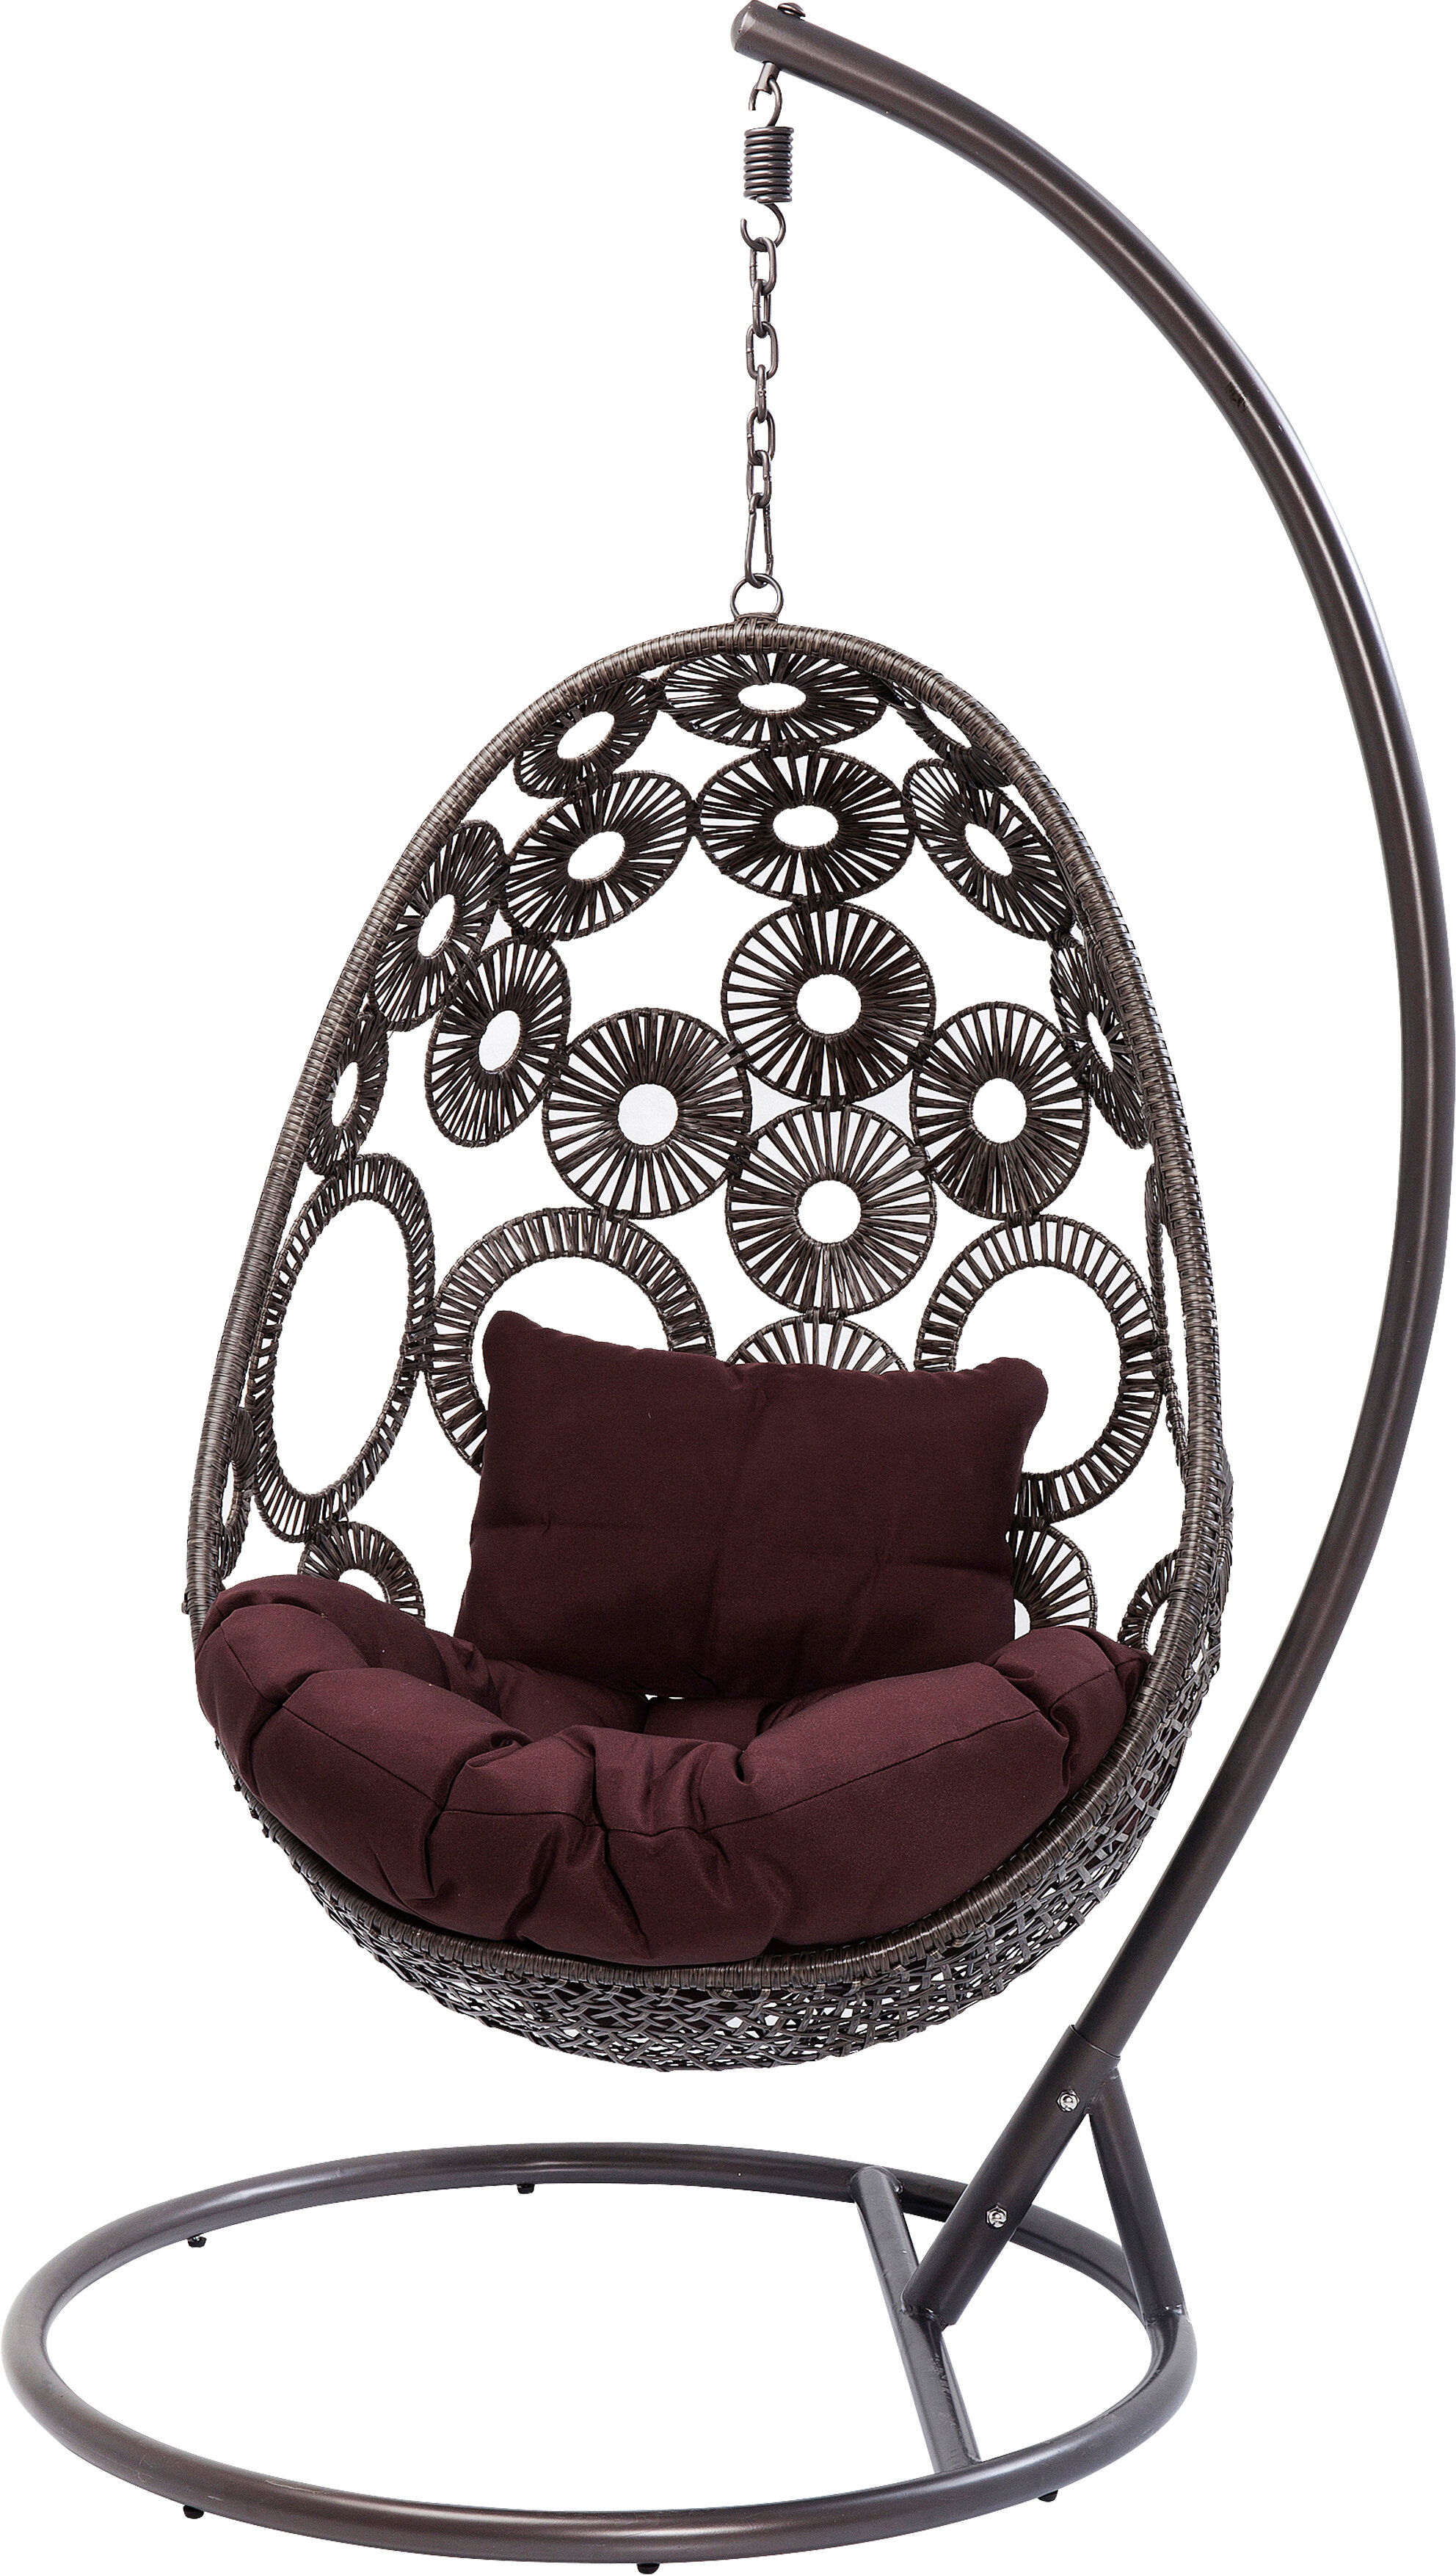 Kare Design Ibiza Swing Chair With Stand Wayfaircouk